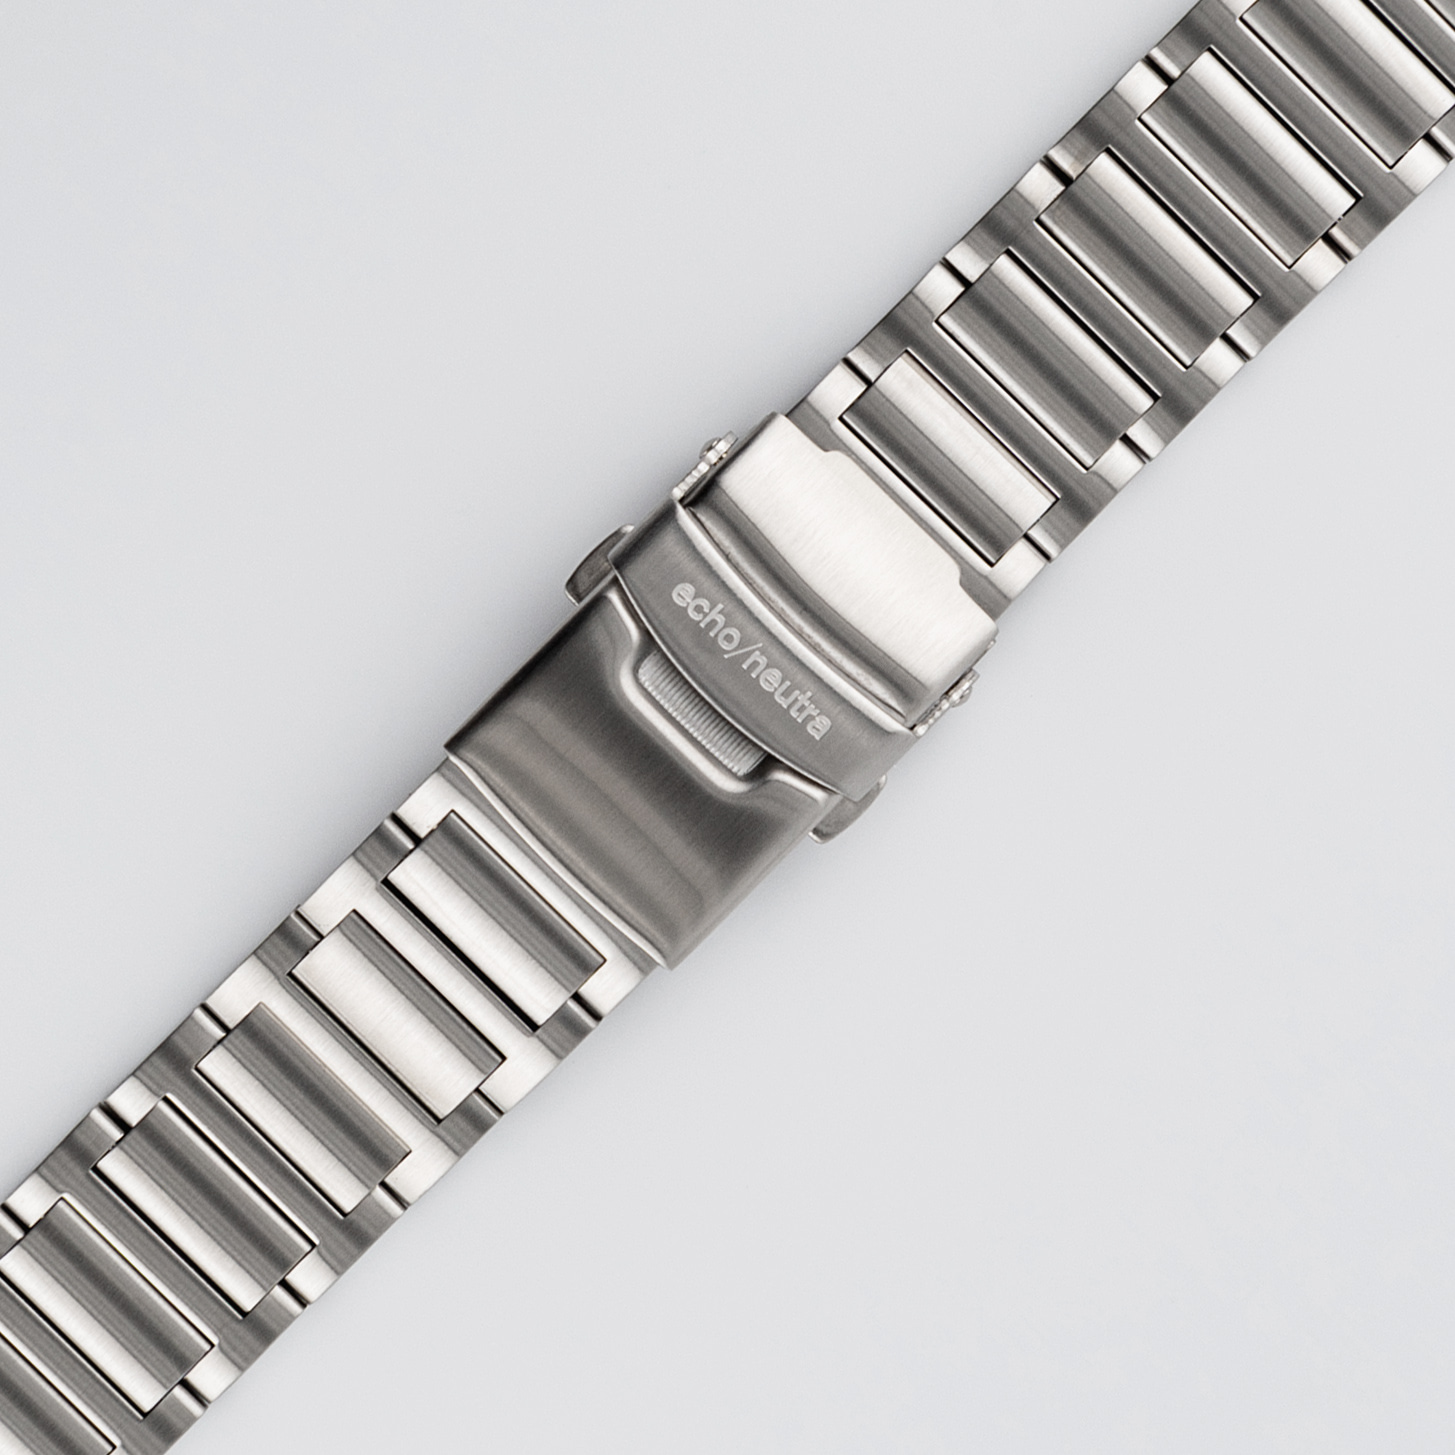 AVERAU39 H-link steel bracelet with double-locking clasp